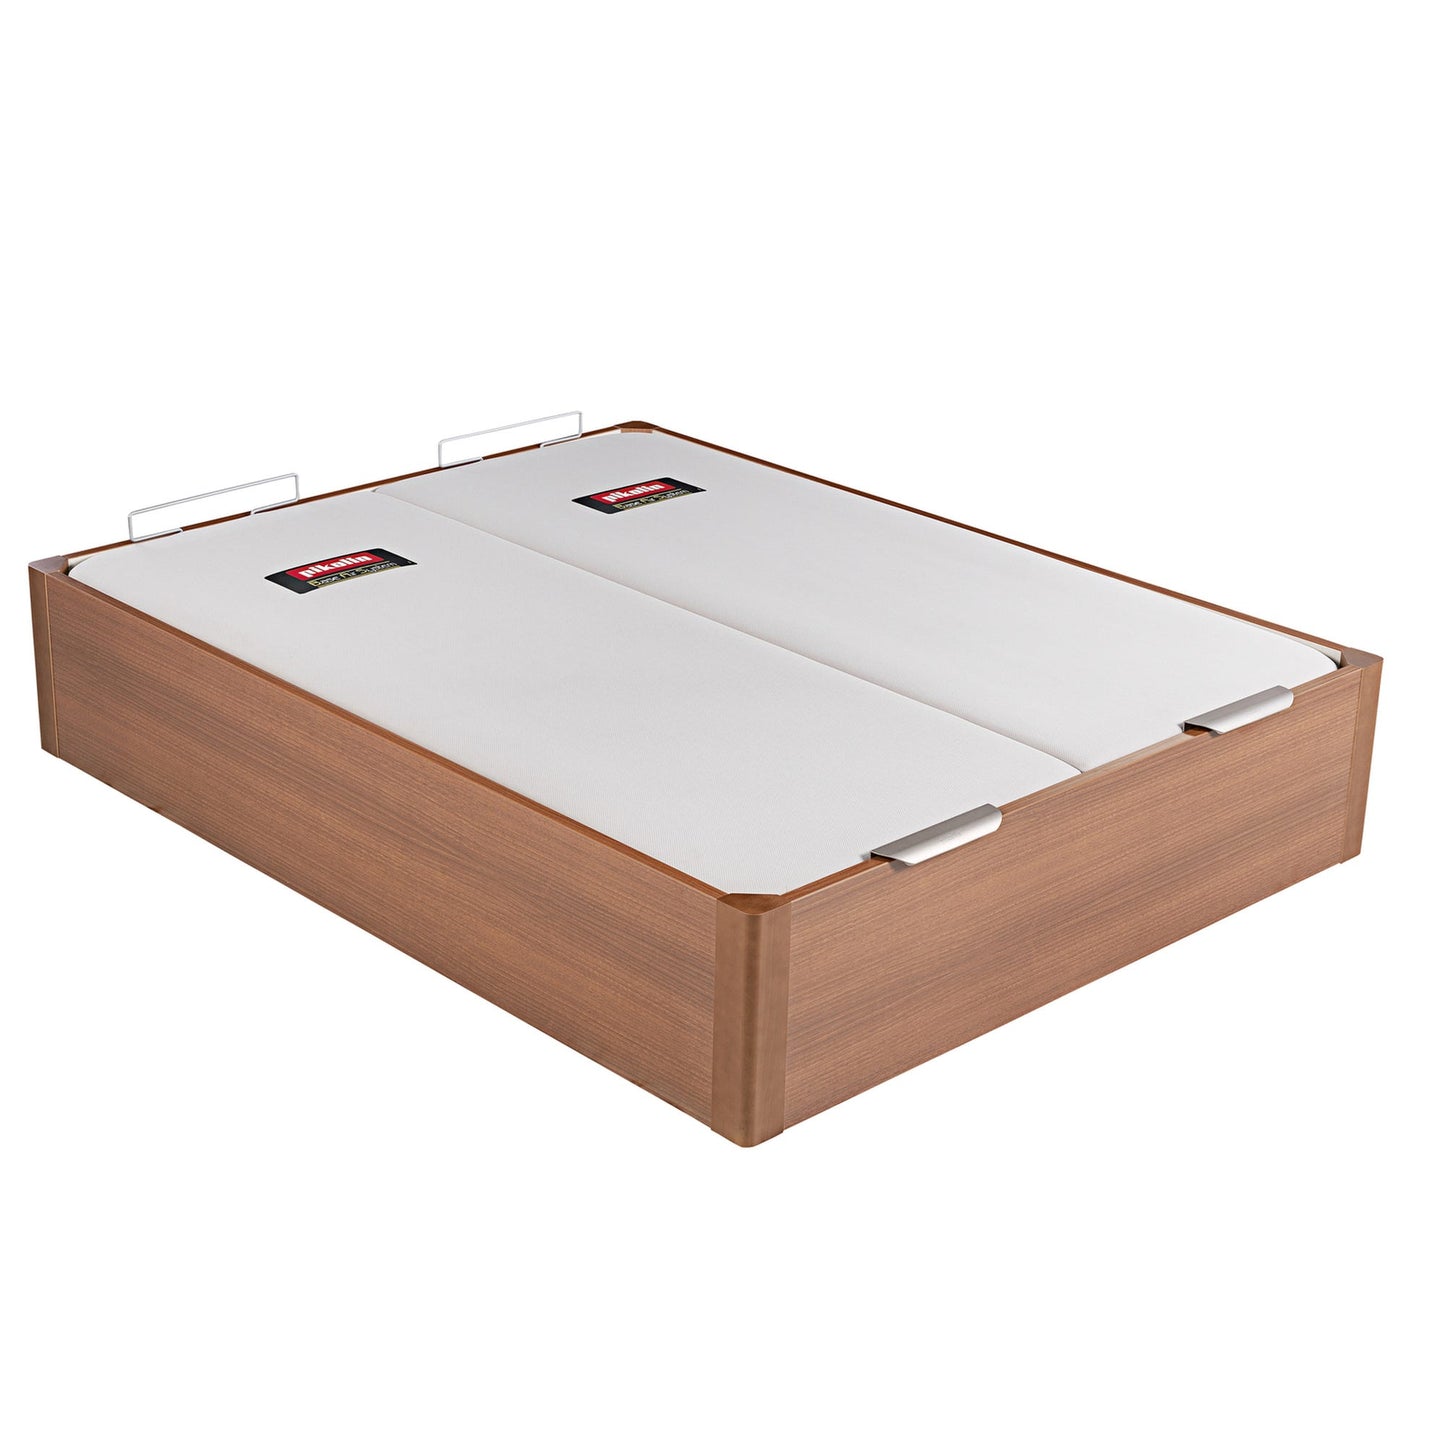 Canapé abatible de madera de alta capacidad tapa doble de color cerezo - DESIGN - 200x210